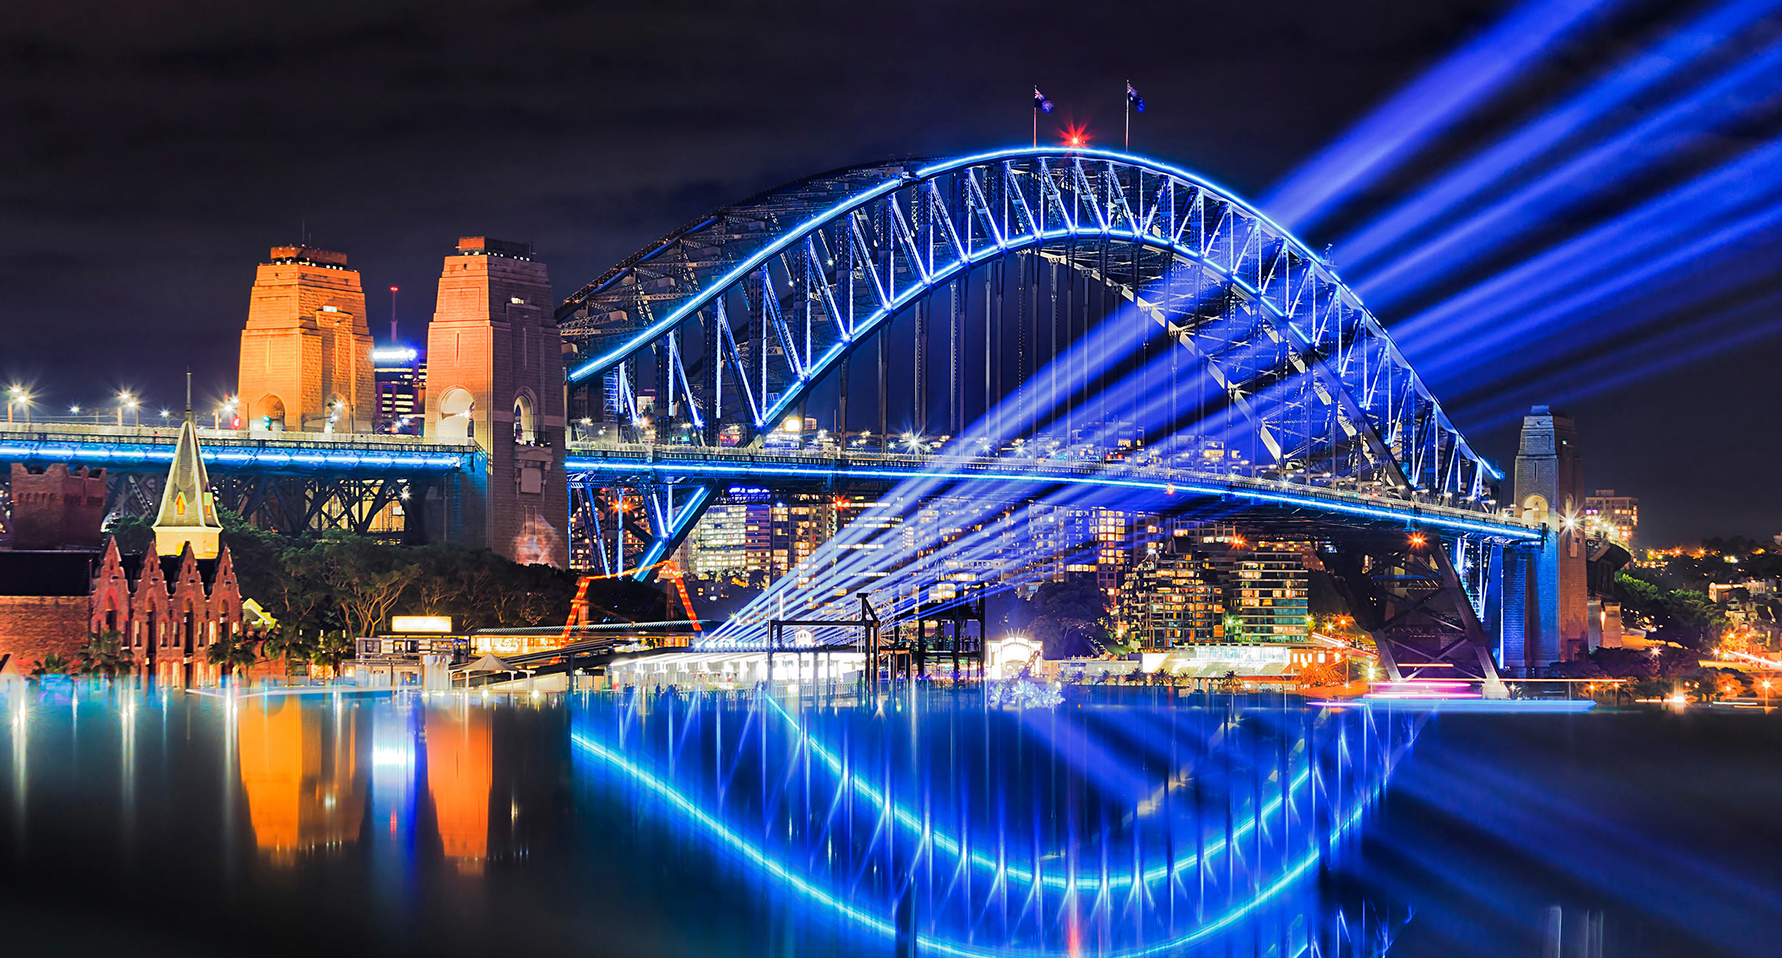 Sydney Harbour Bridge lights up 